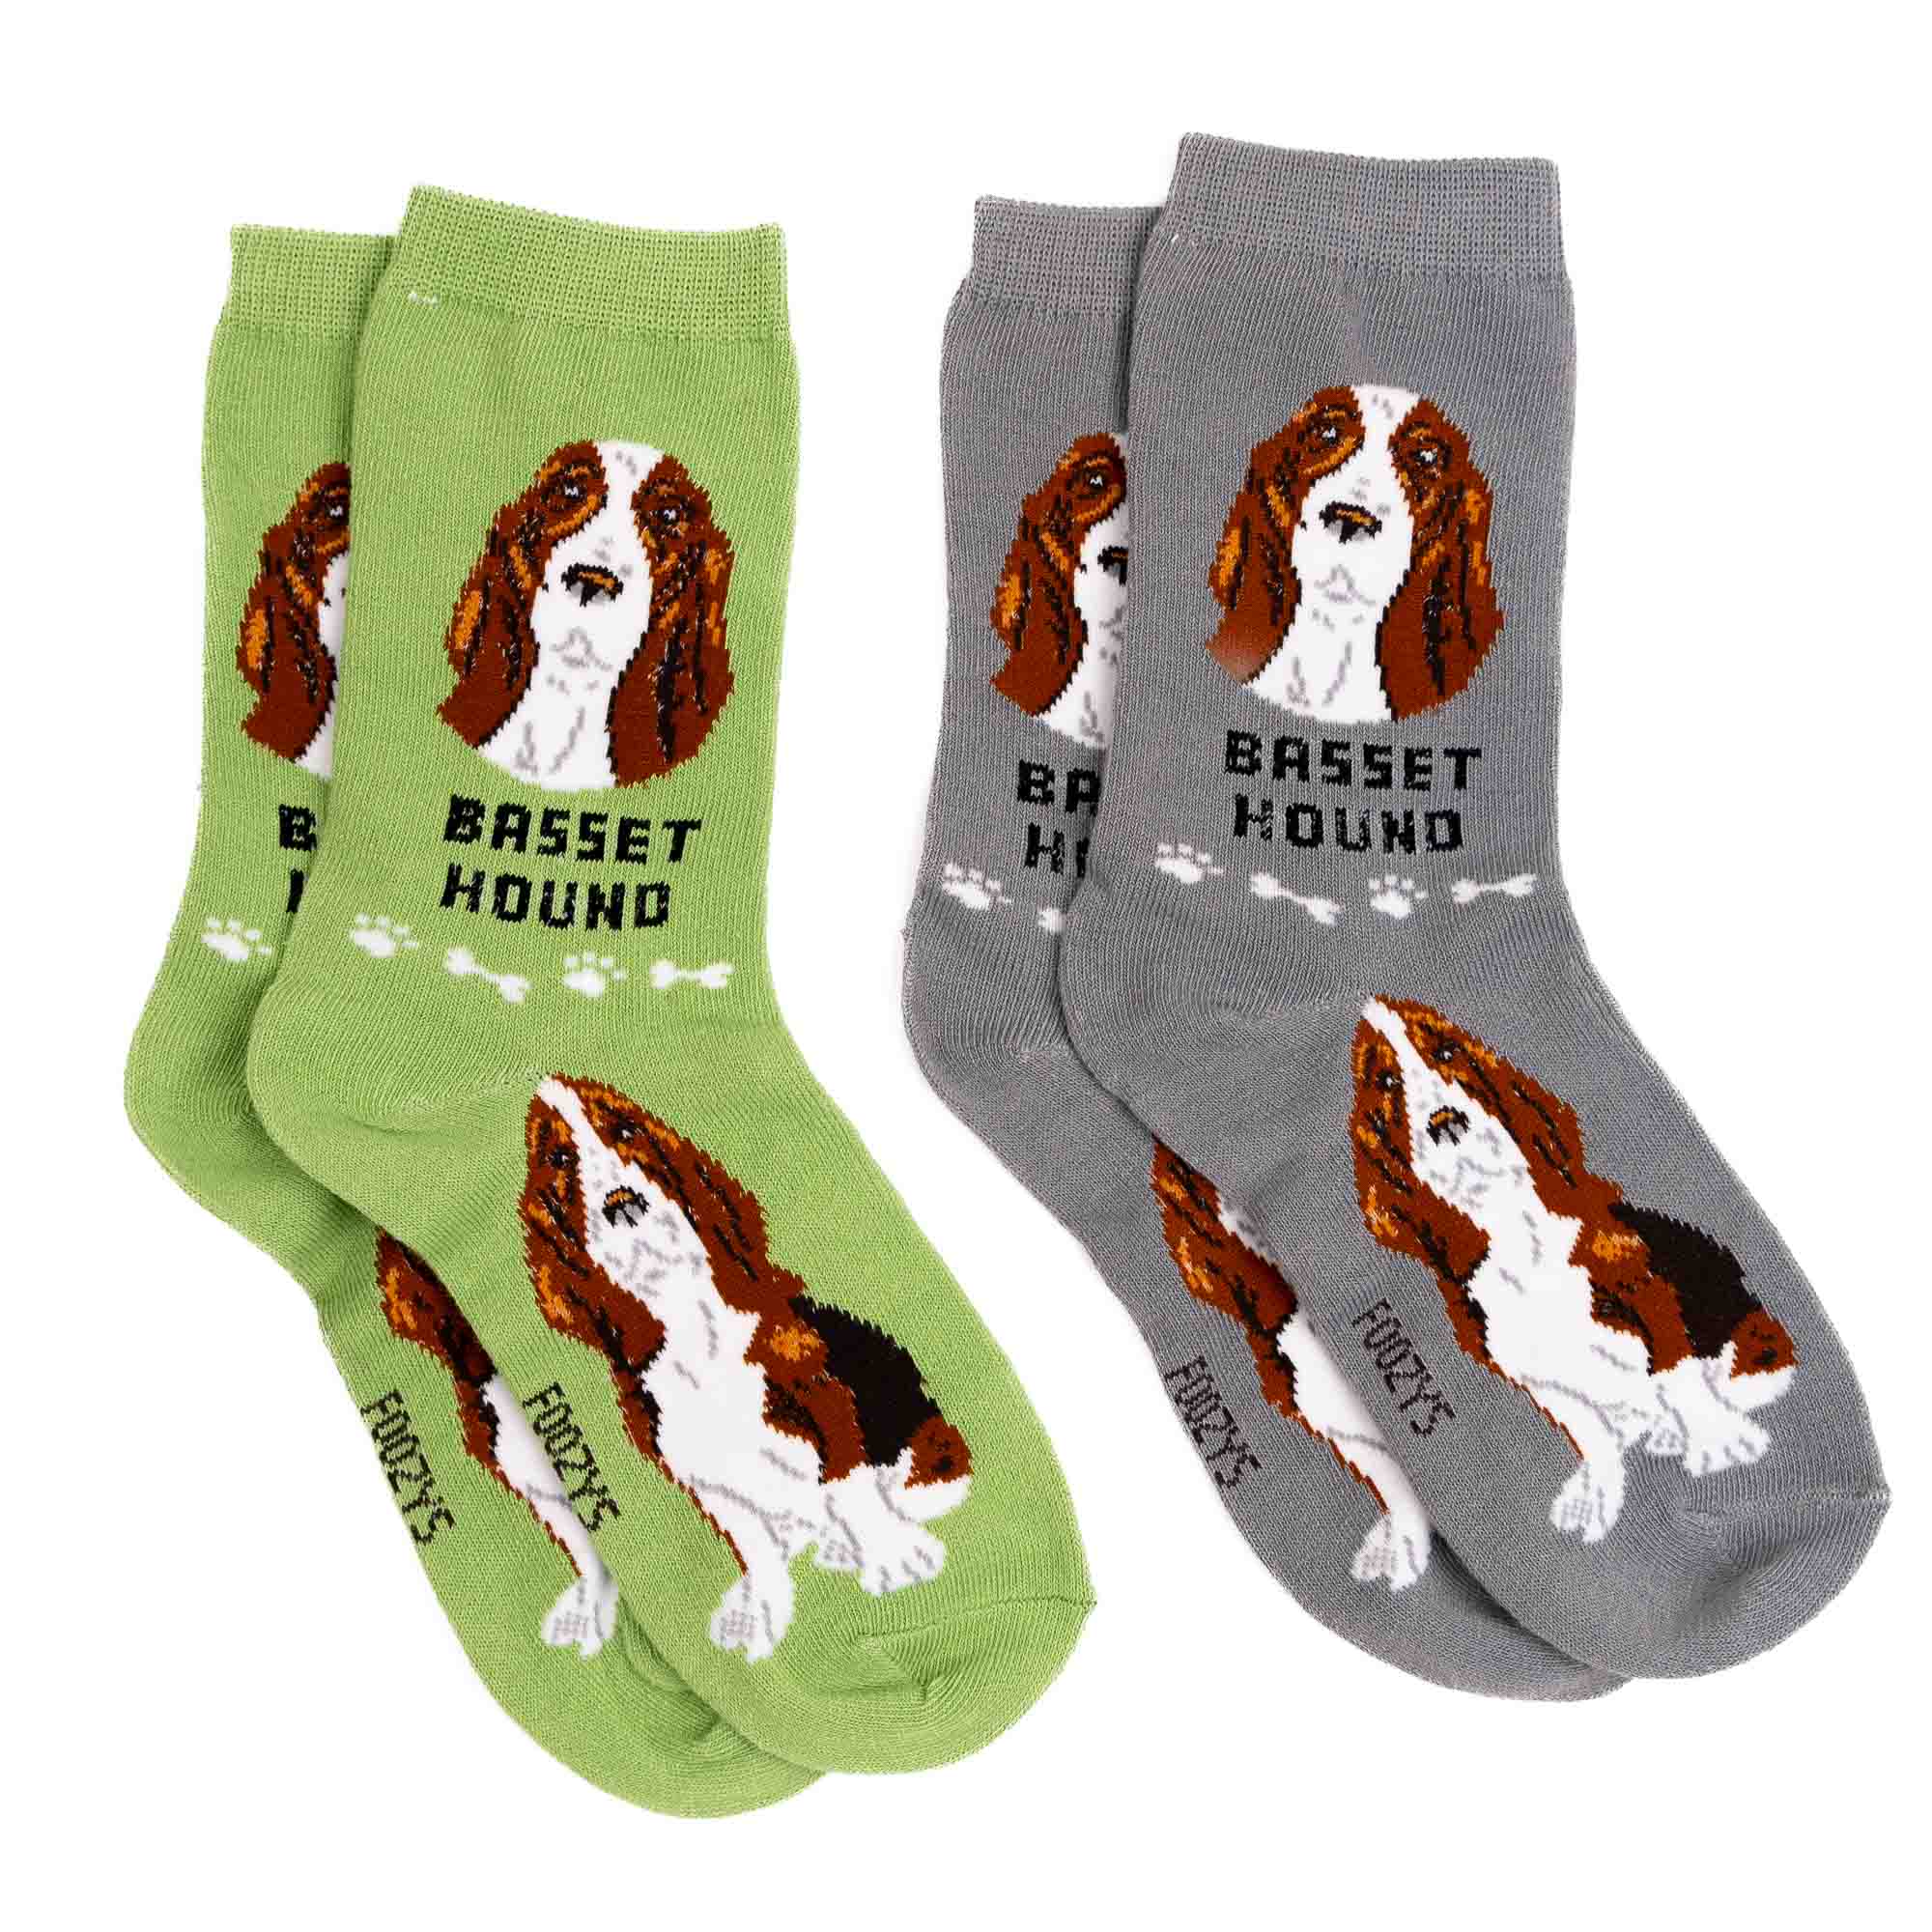 My Favorite Dog Breed Socks ❤️ Basset Hound Breed Dog Sock - 2 Set Collection